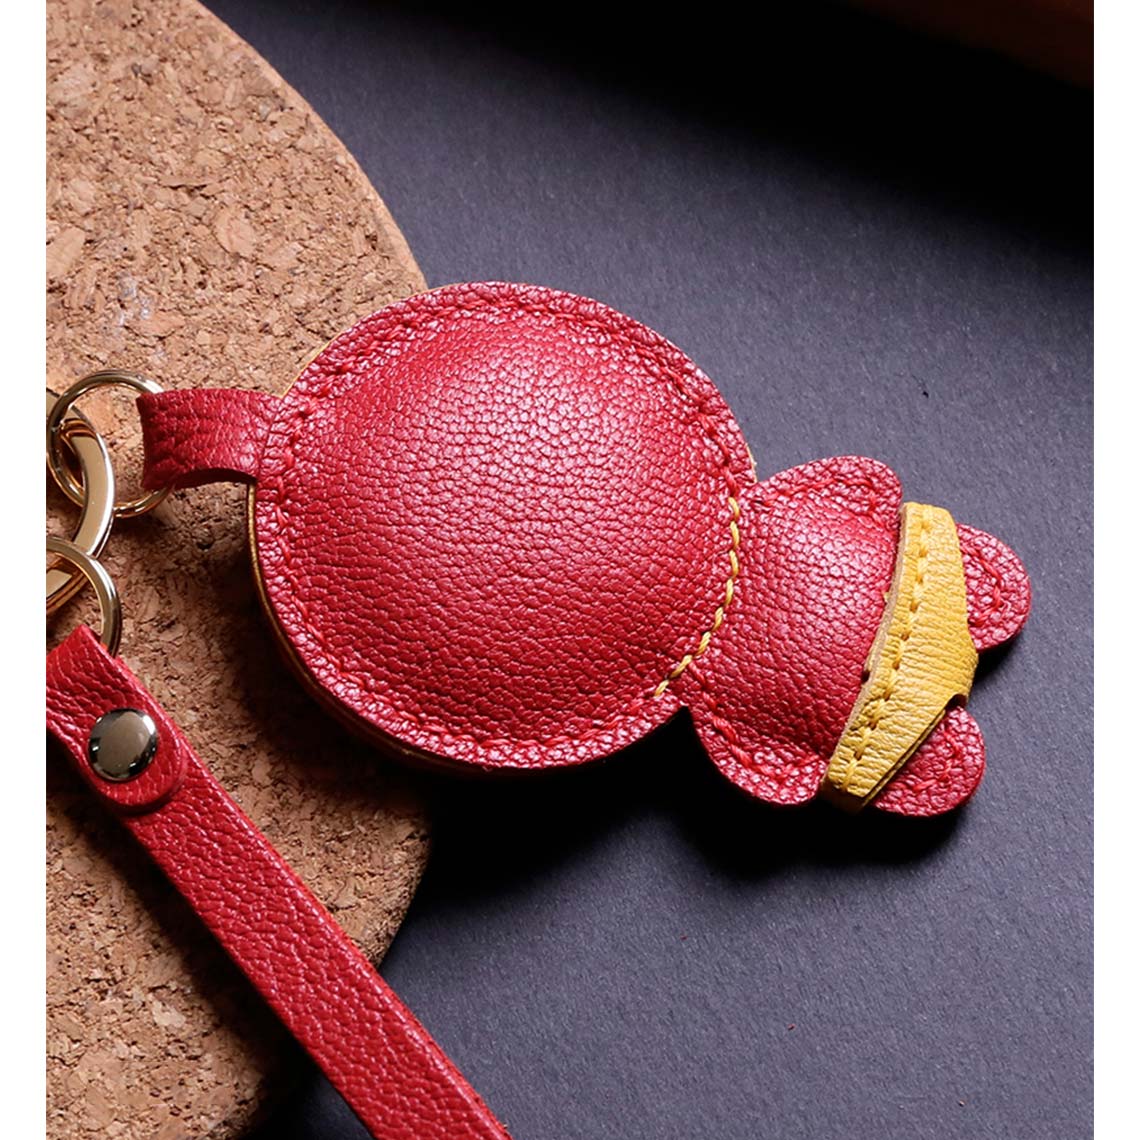 Marvel avengers Ironman Leather keychain keyring charm handbag pendant